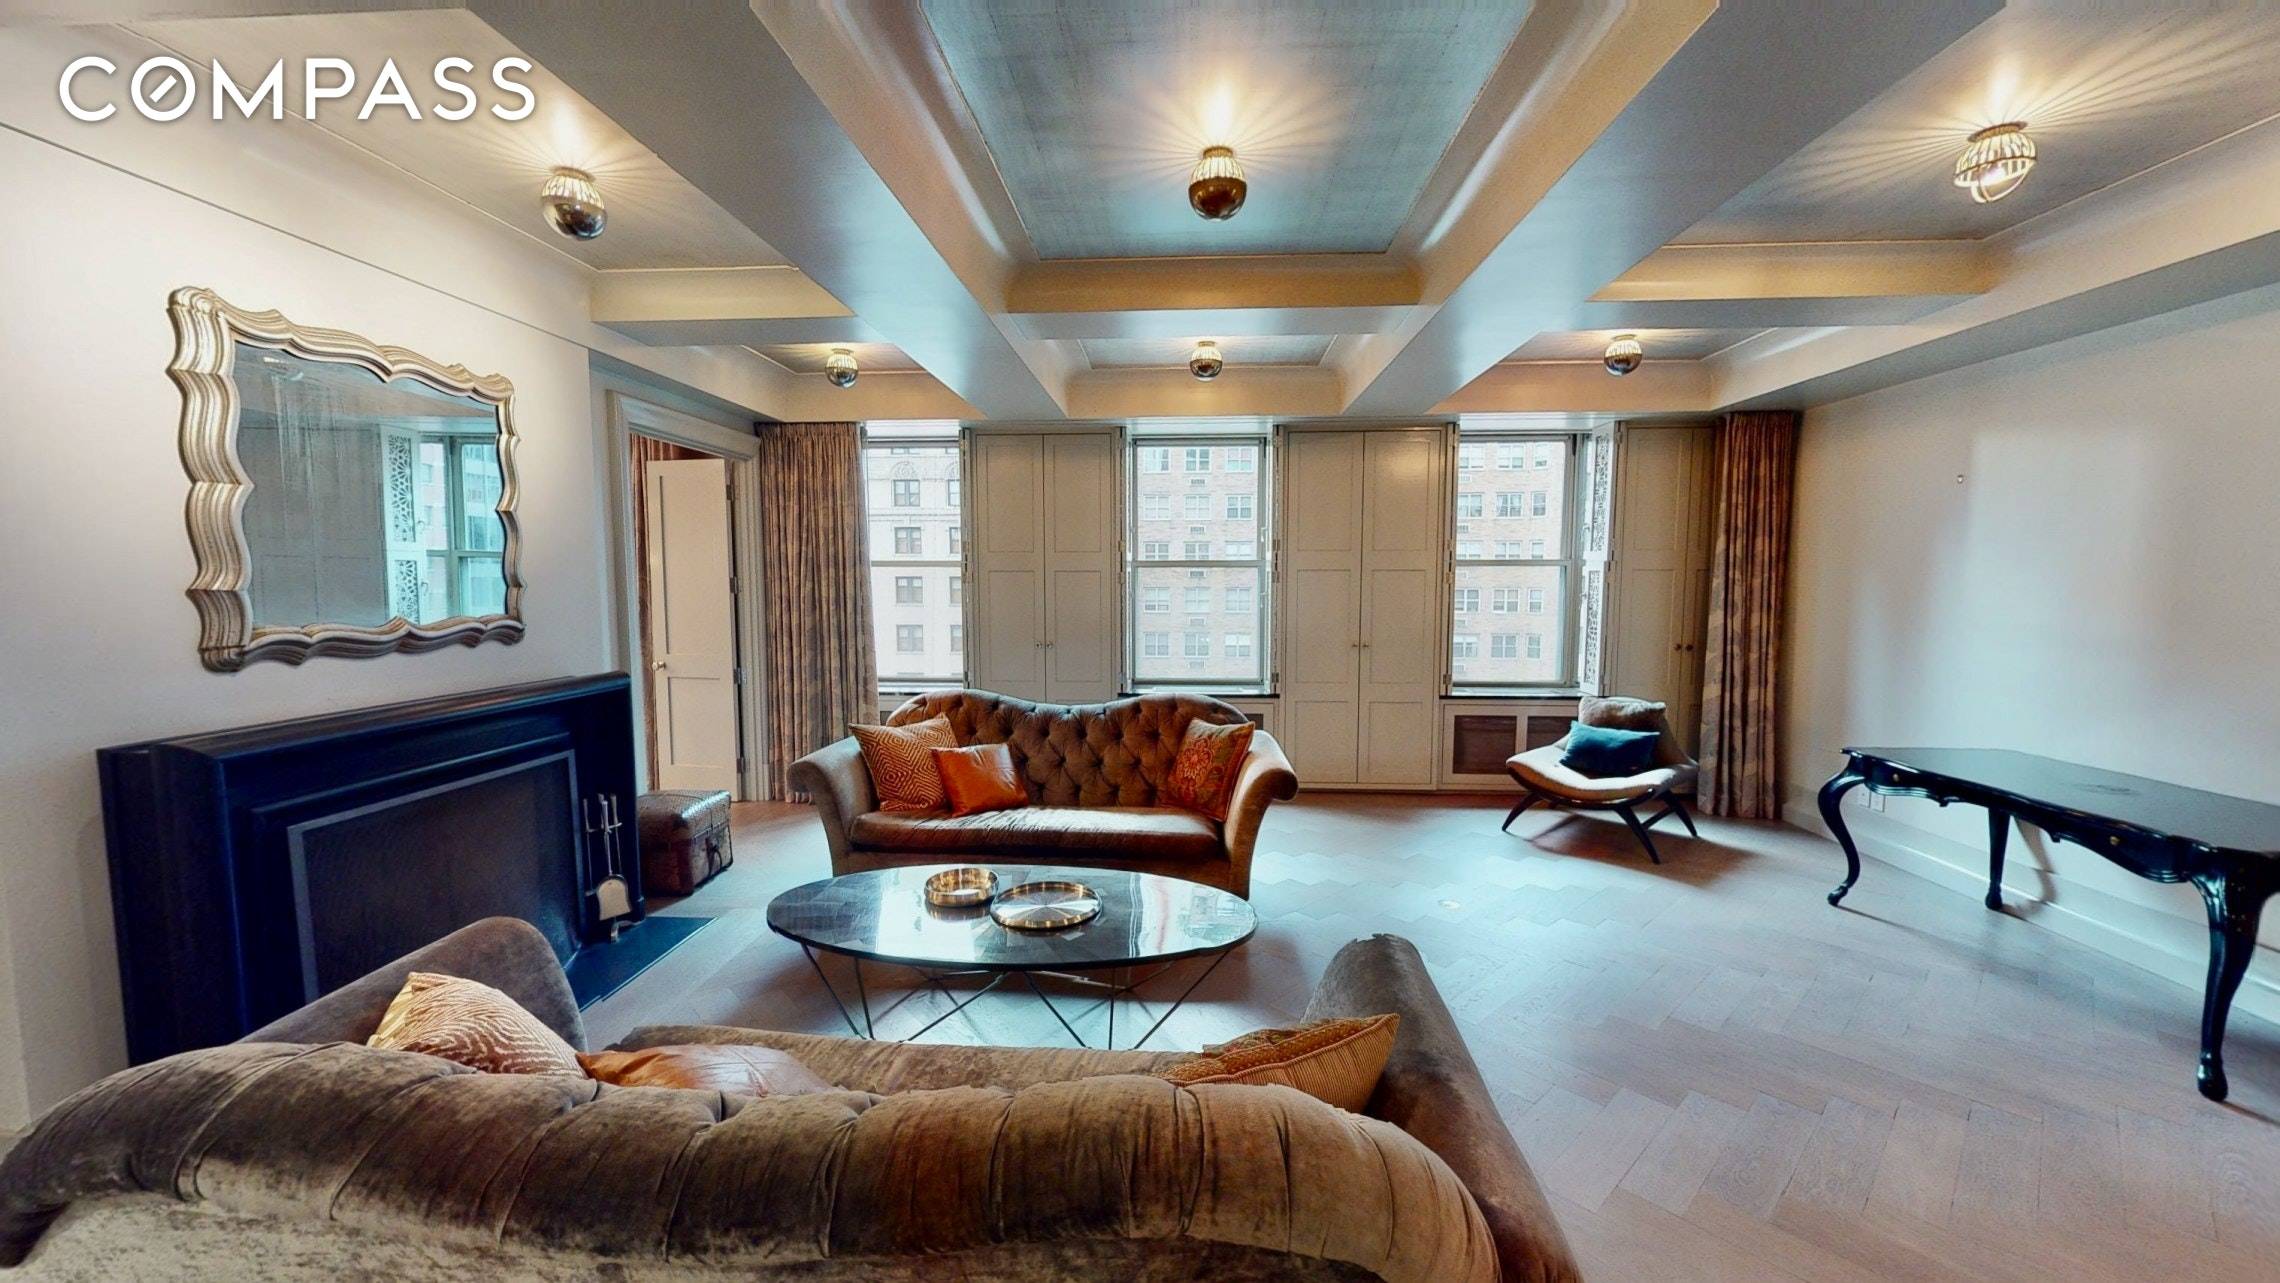 Exquisite Prewar Four Bedroom Apartment at Park Avenue offered for rent.